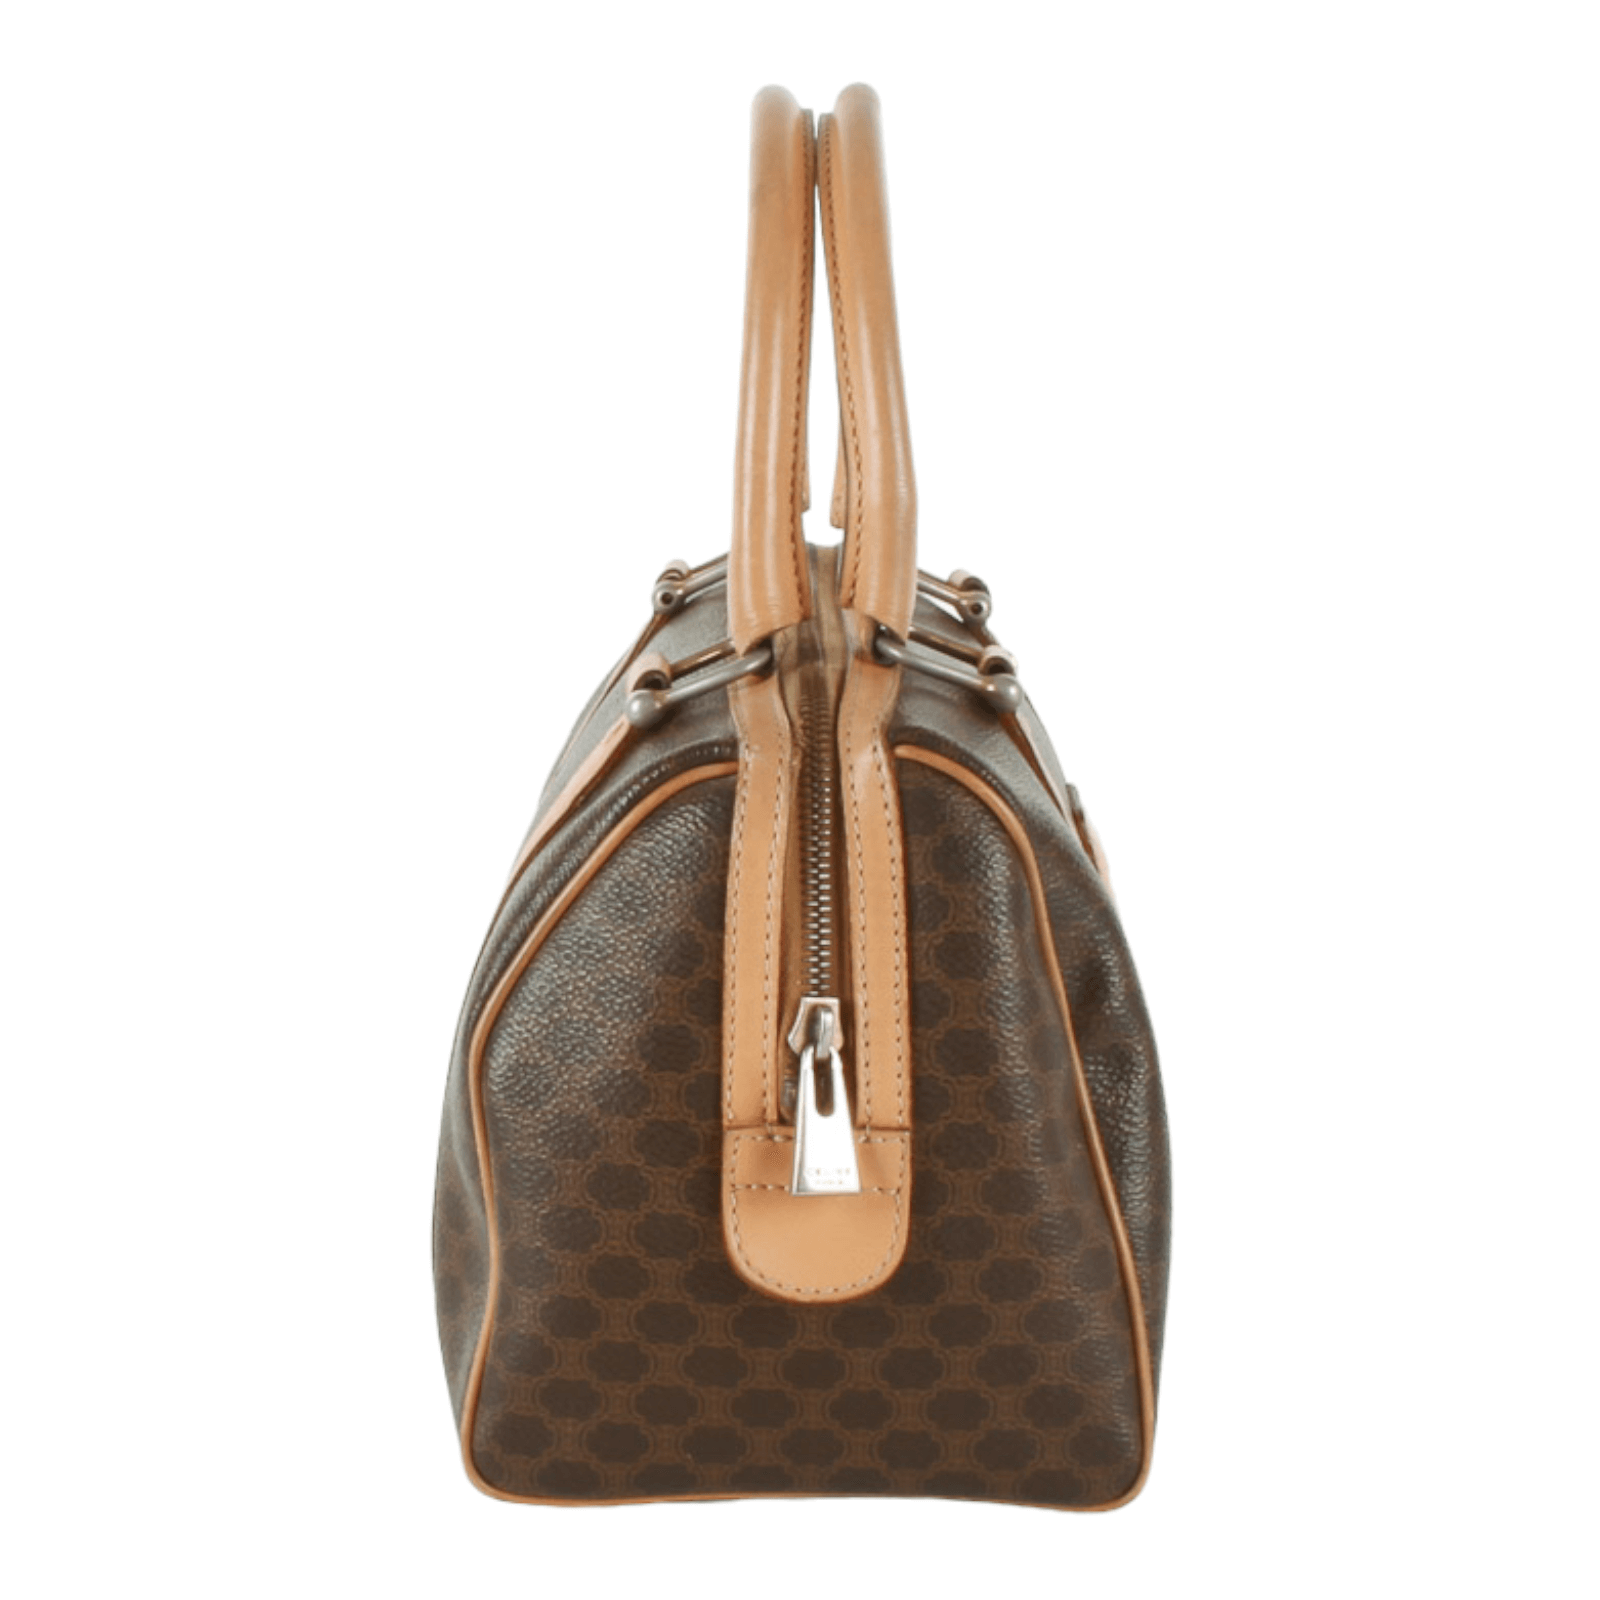 Authentic Celine Handbag PVC Brown Leather Boston Travel Bag